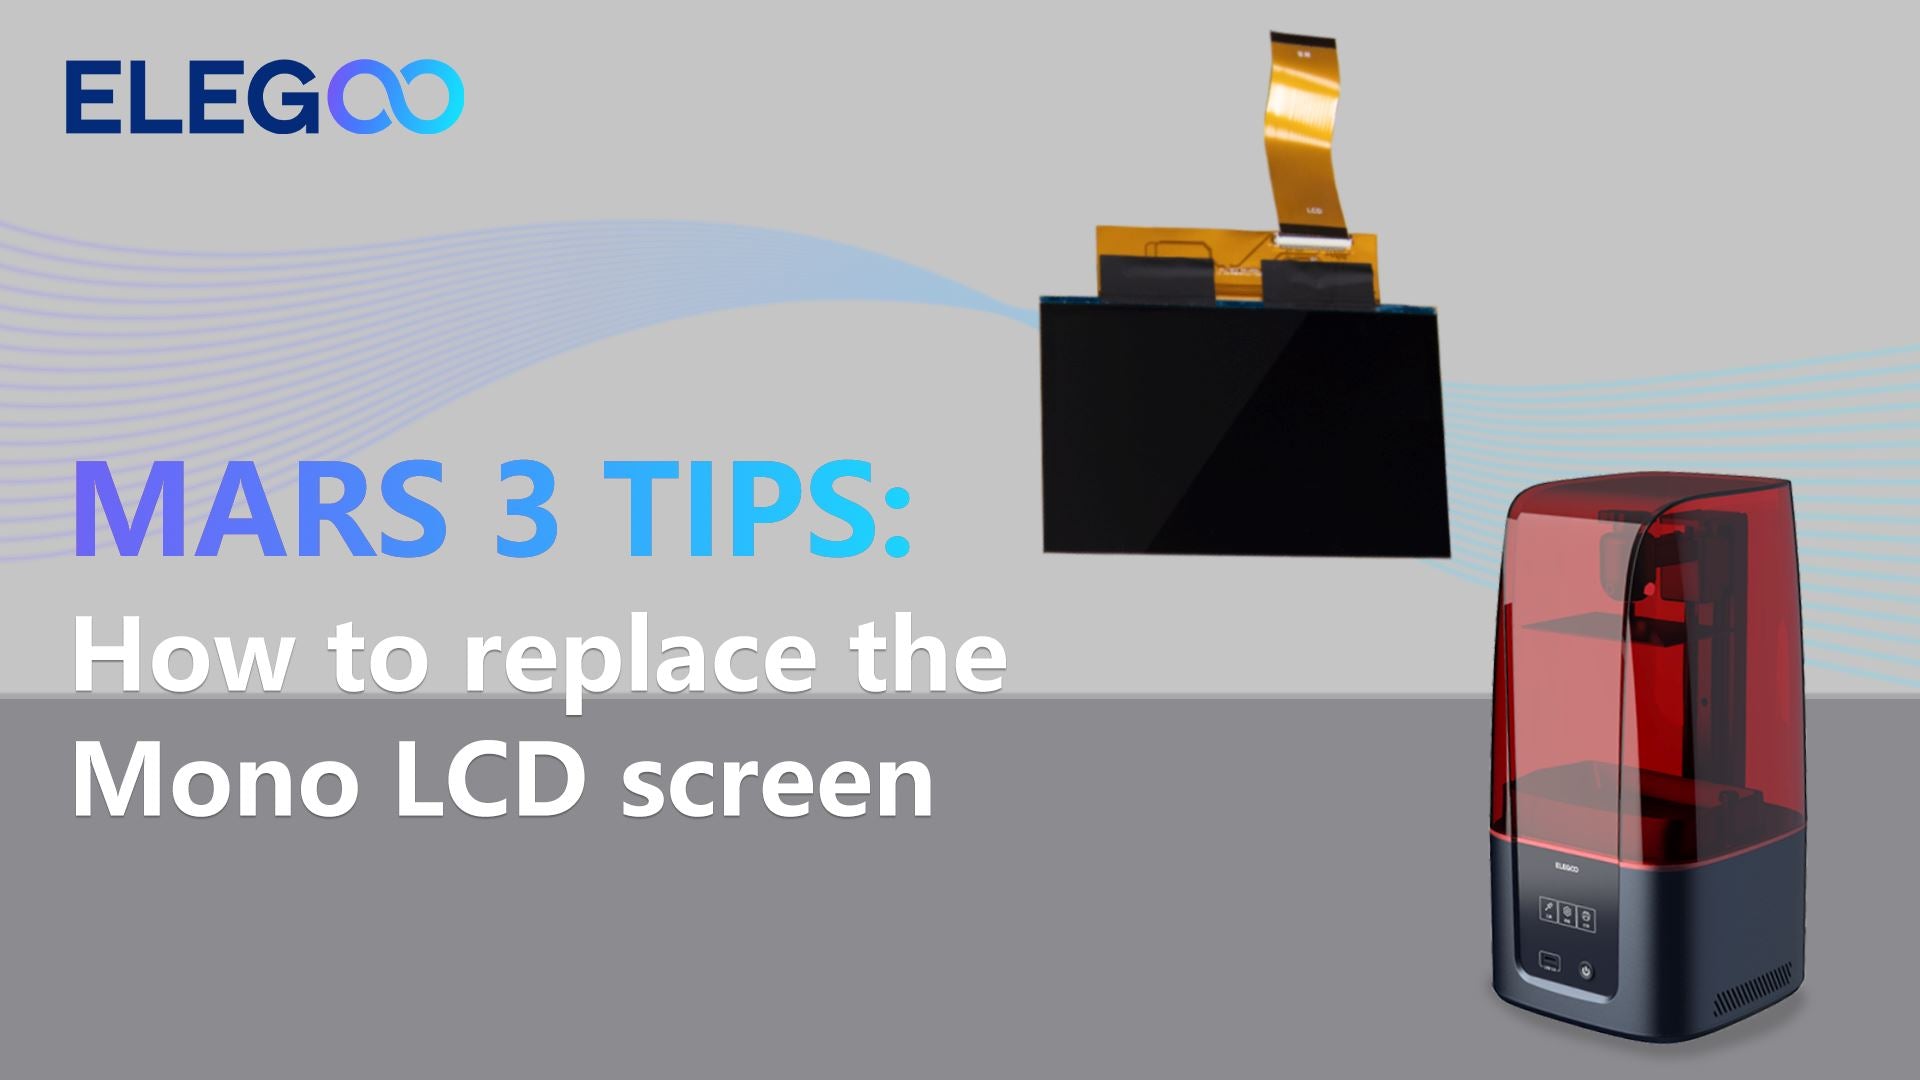 ELEGOO Mars 3: How to replace the LCD screen